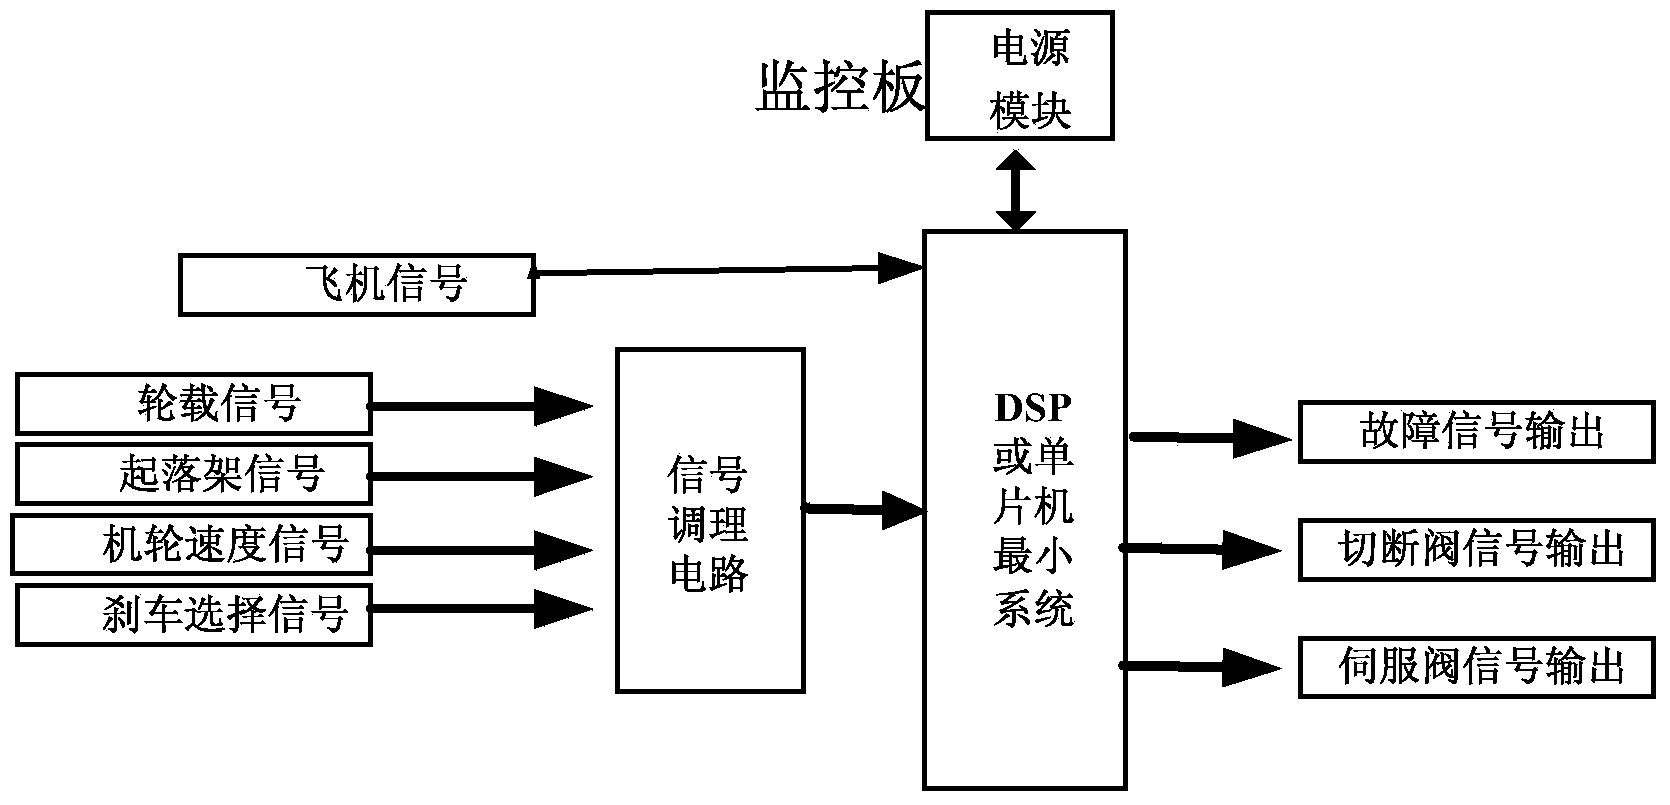 DSP+FPGA (digital signal processor and field programmable gate array)-based anti-skid brake control box of aircraft brake system